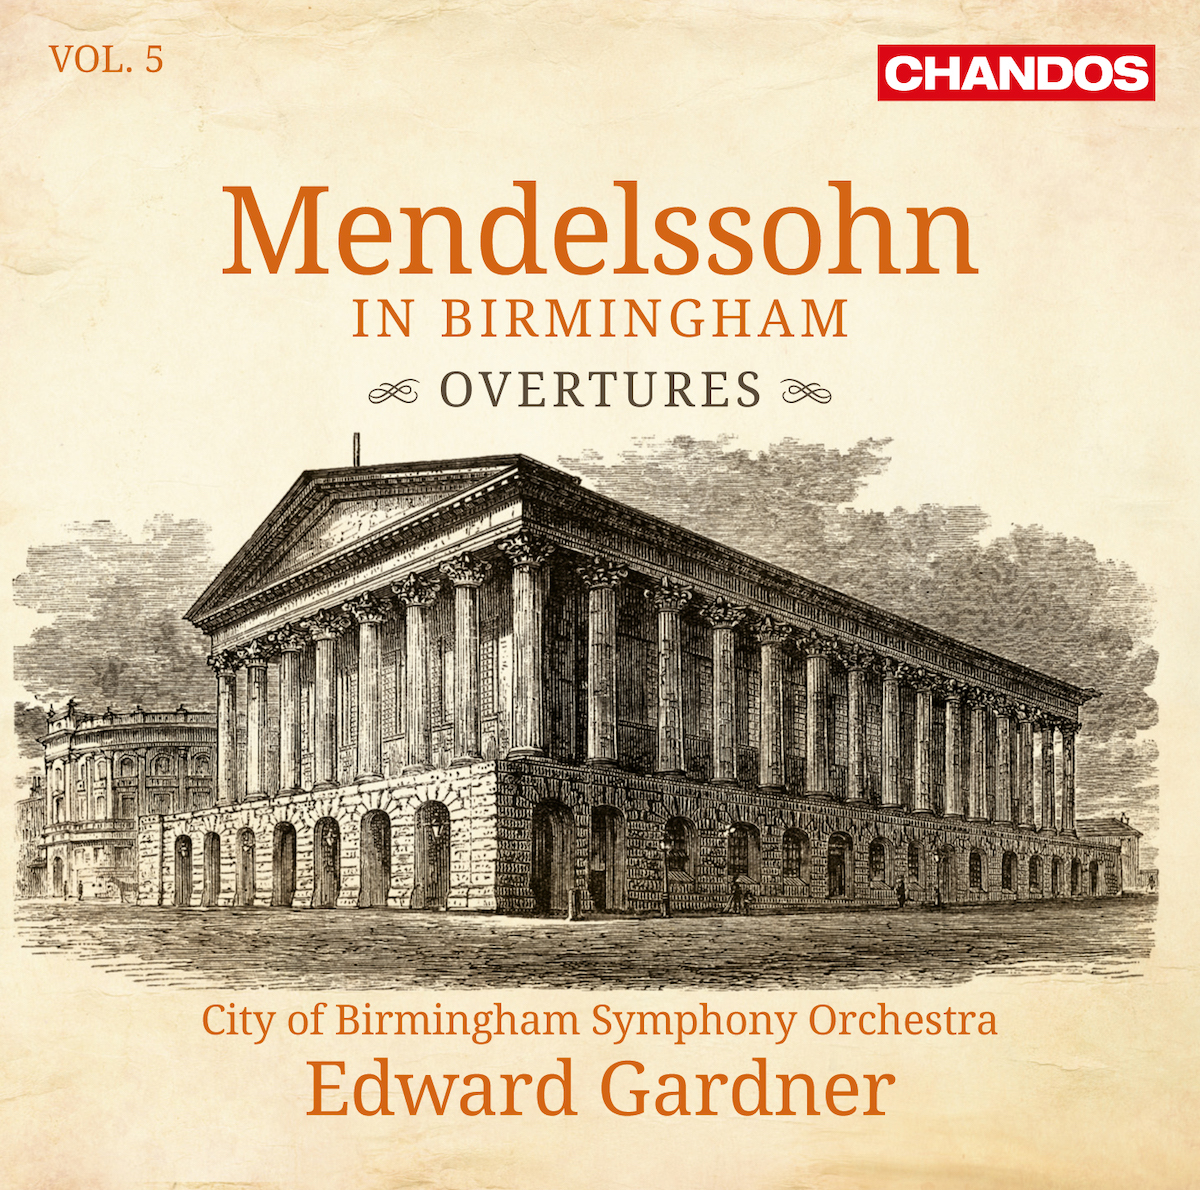 City of Birmingham Symphony Orchestra & Edward Gardner – Mendelssohn in Birmingham Vol. 5 (2019) [FLAC 24bit/96kHz]